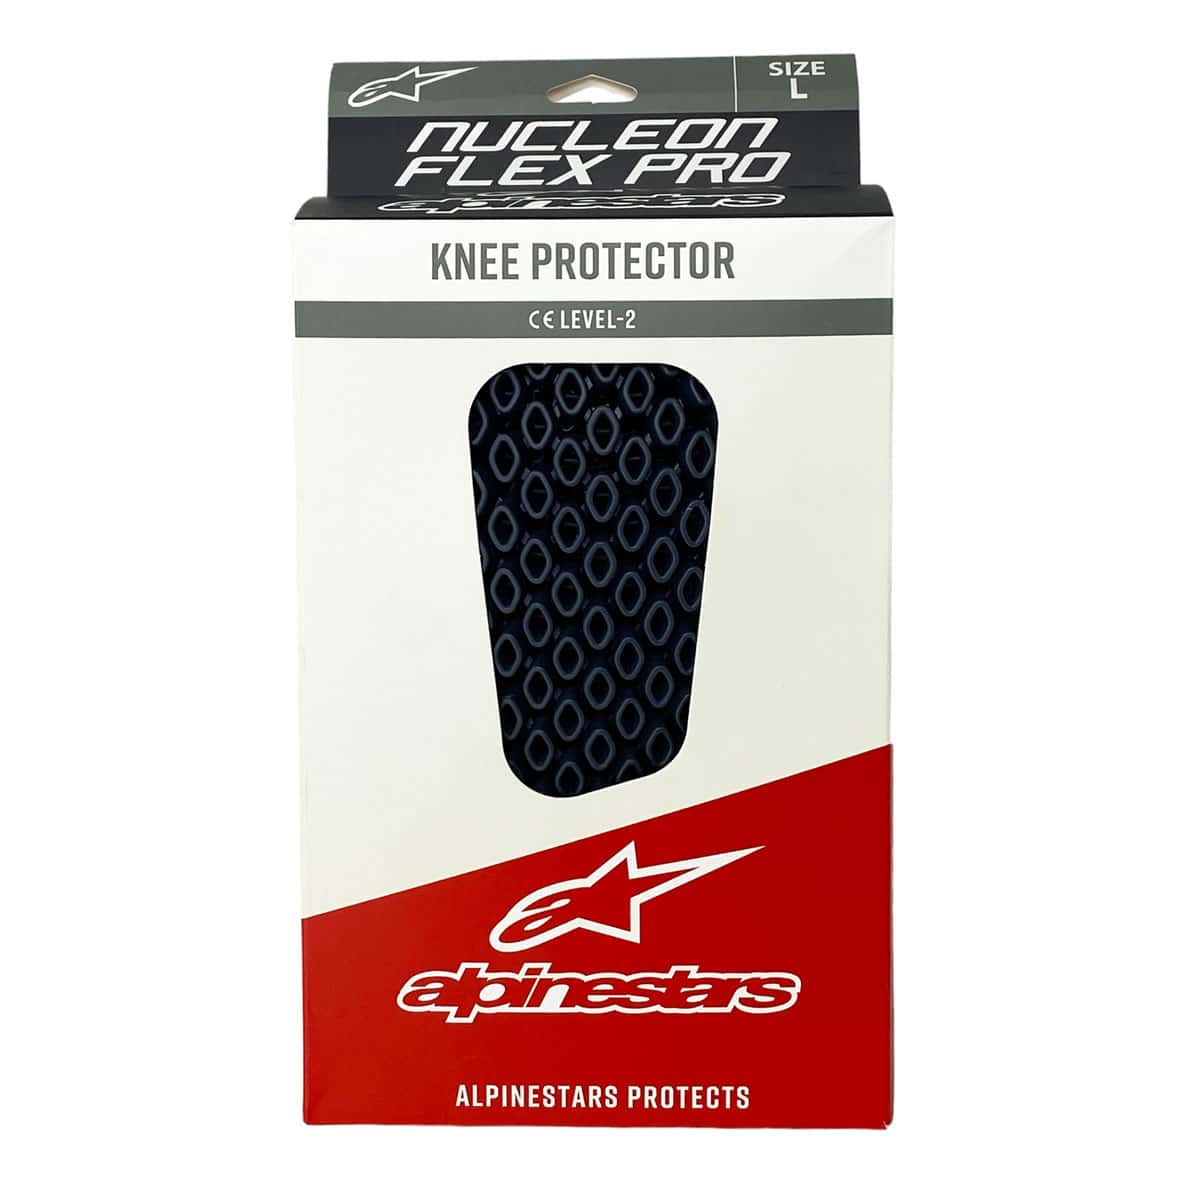  Alpinestars Nucleon Flex Pro Knee Protector CE L2 - Pair